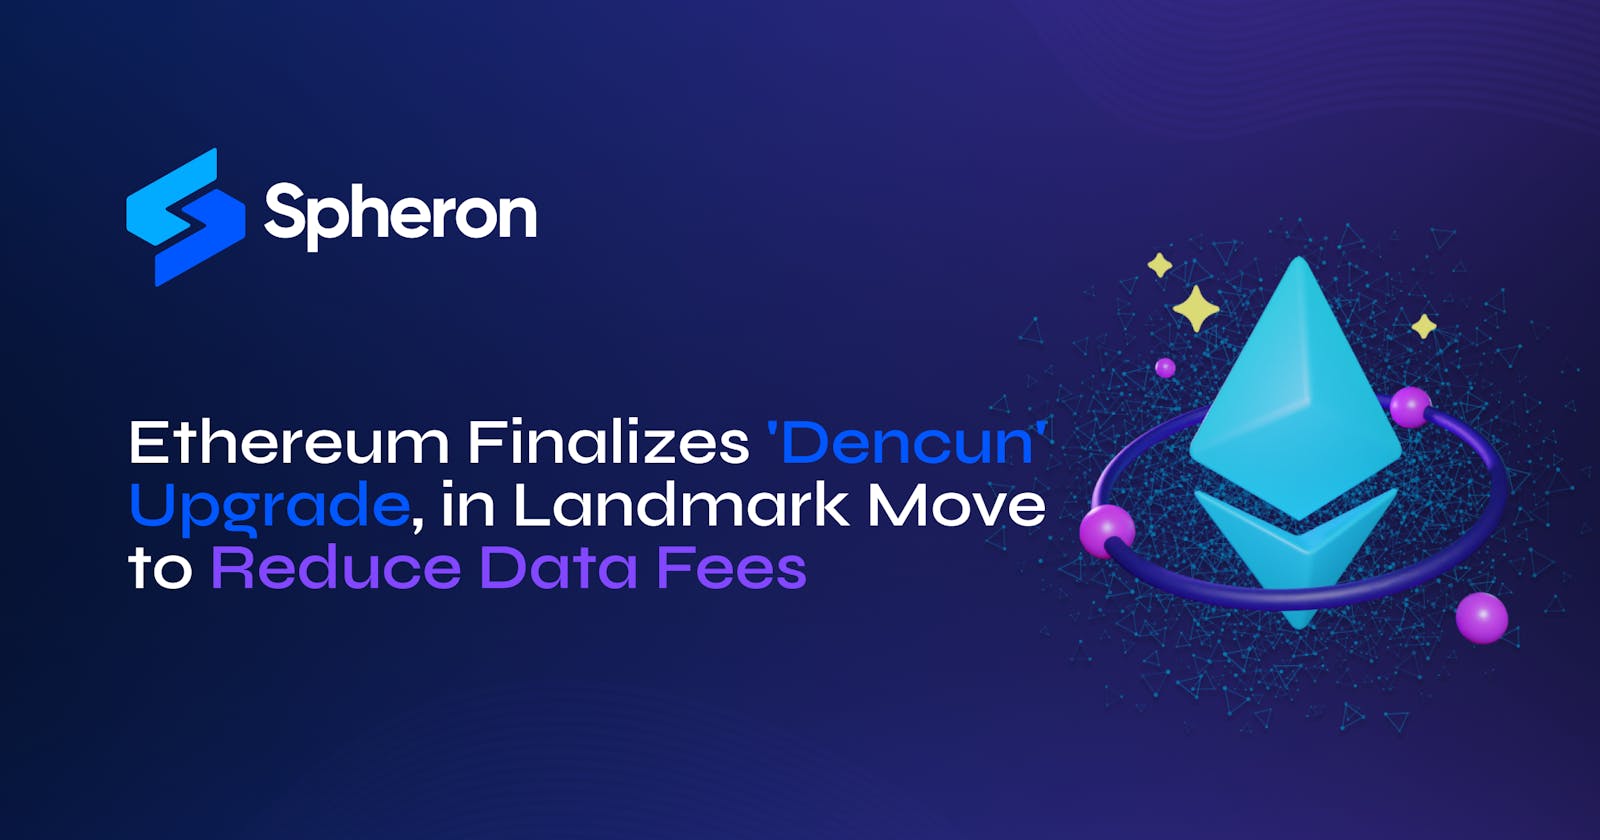 Ethereum Finalizes 'Dencun' Upgrade Reducing Data Fees